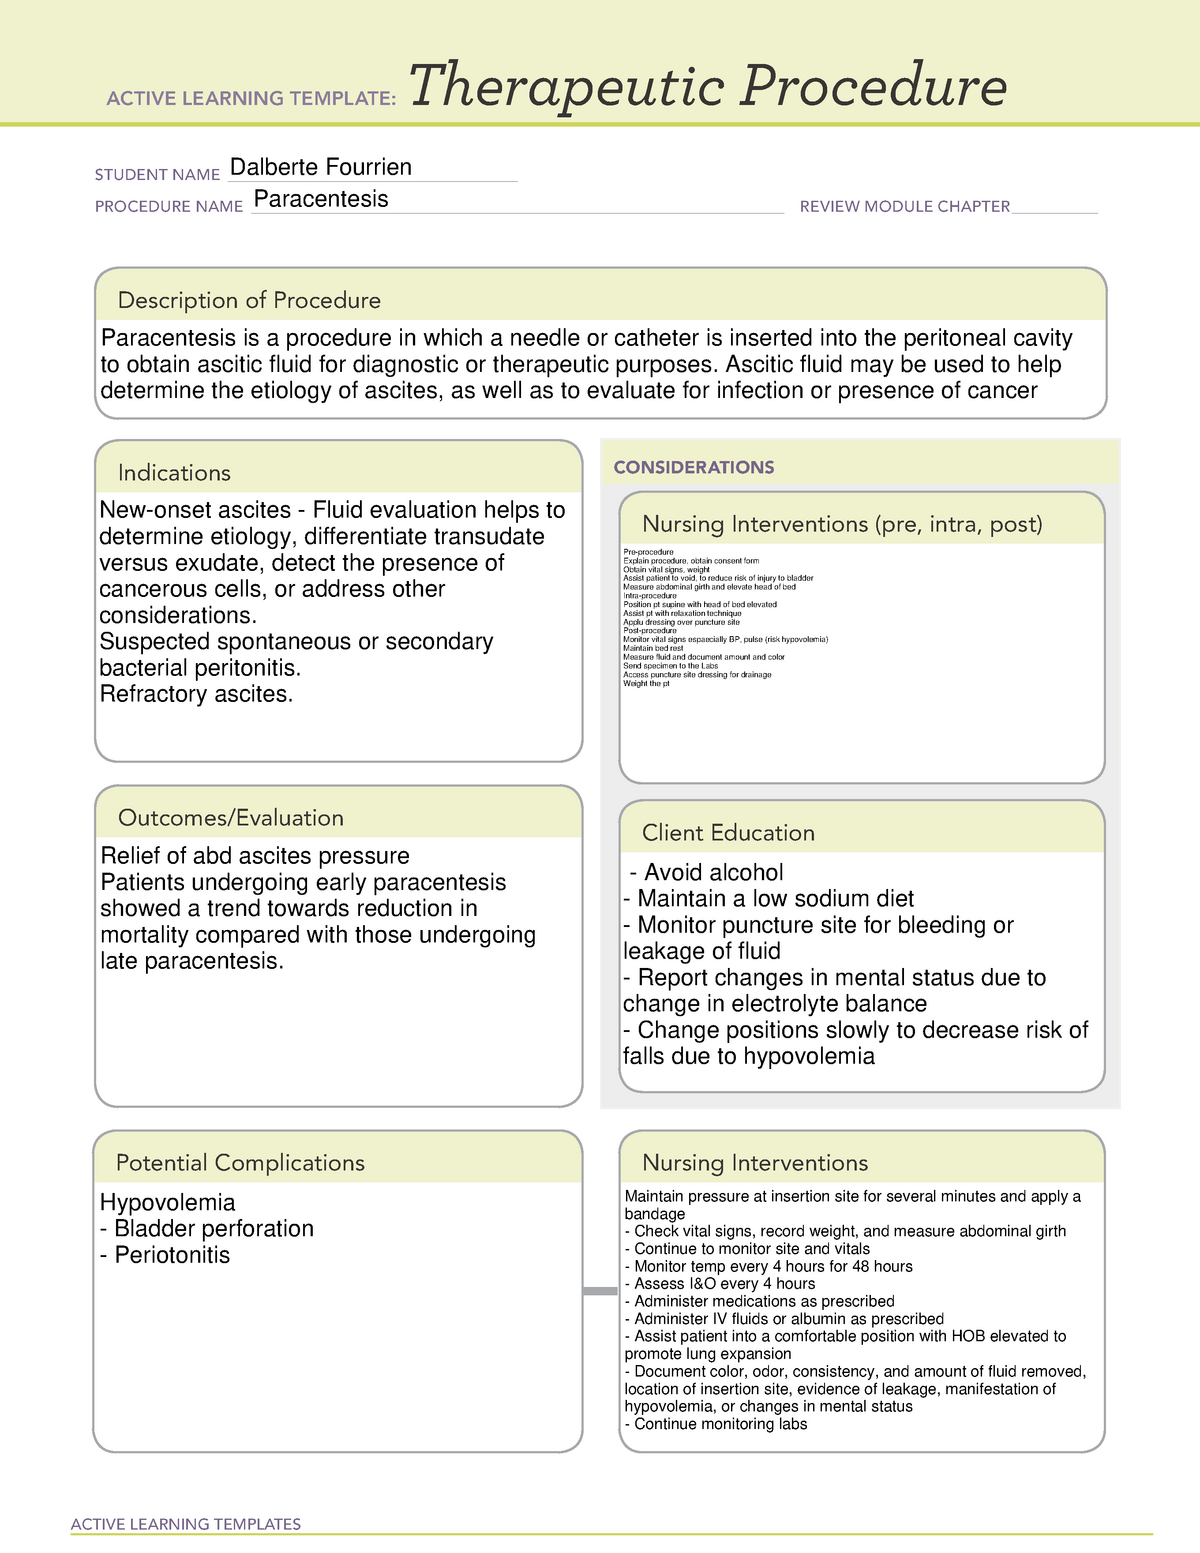 ati-therapeutic-procedure-form-paracentesis-active-learning-templates